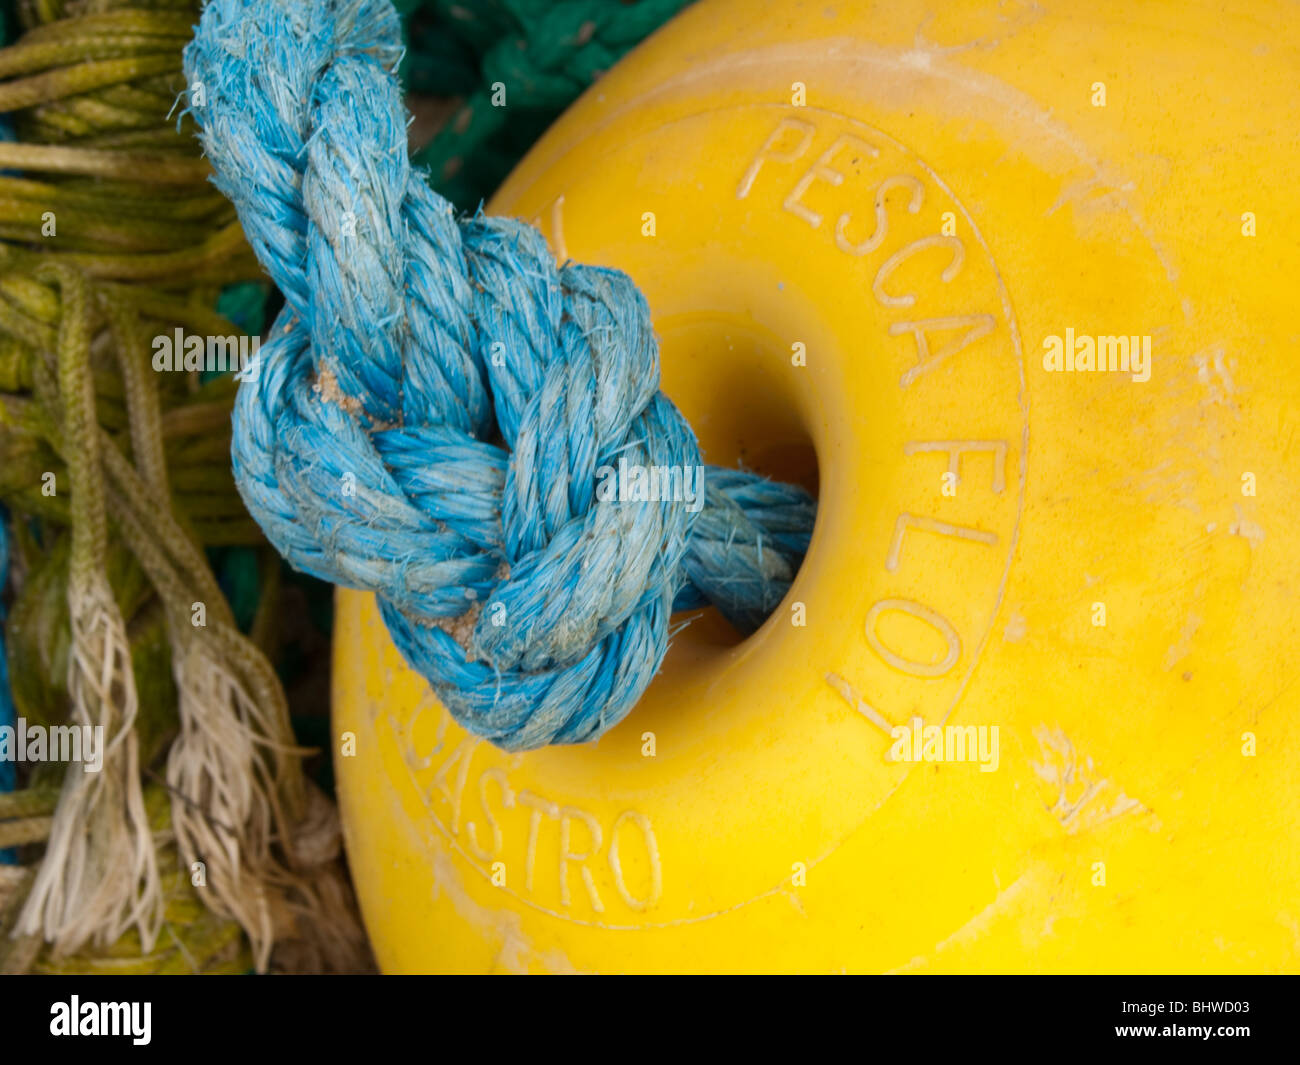 Close up of large round yellow buoy on a rope at Martha's Vineyard, Massachusetts USA Stock Photo